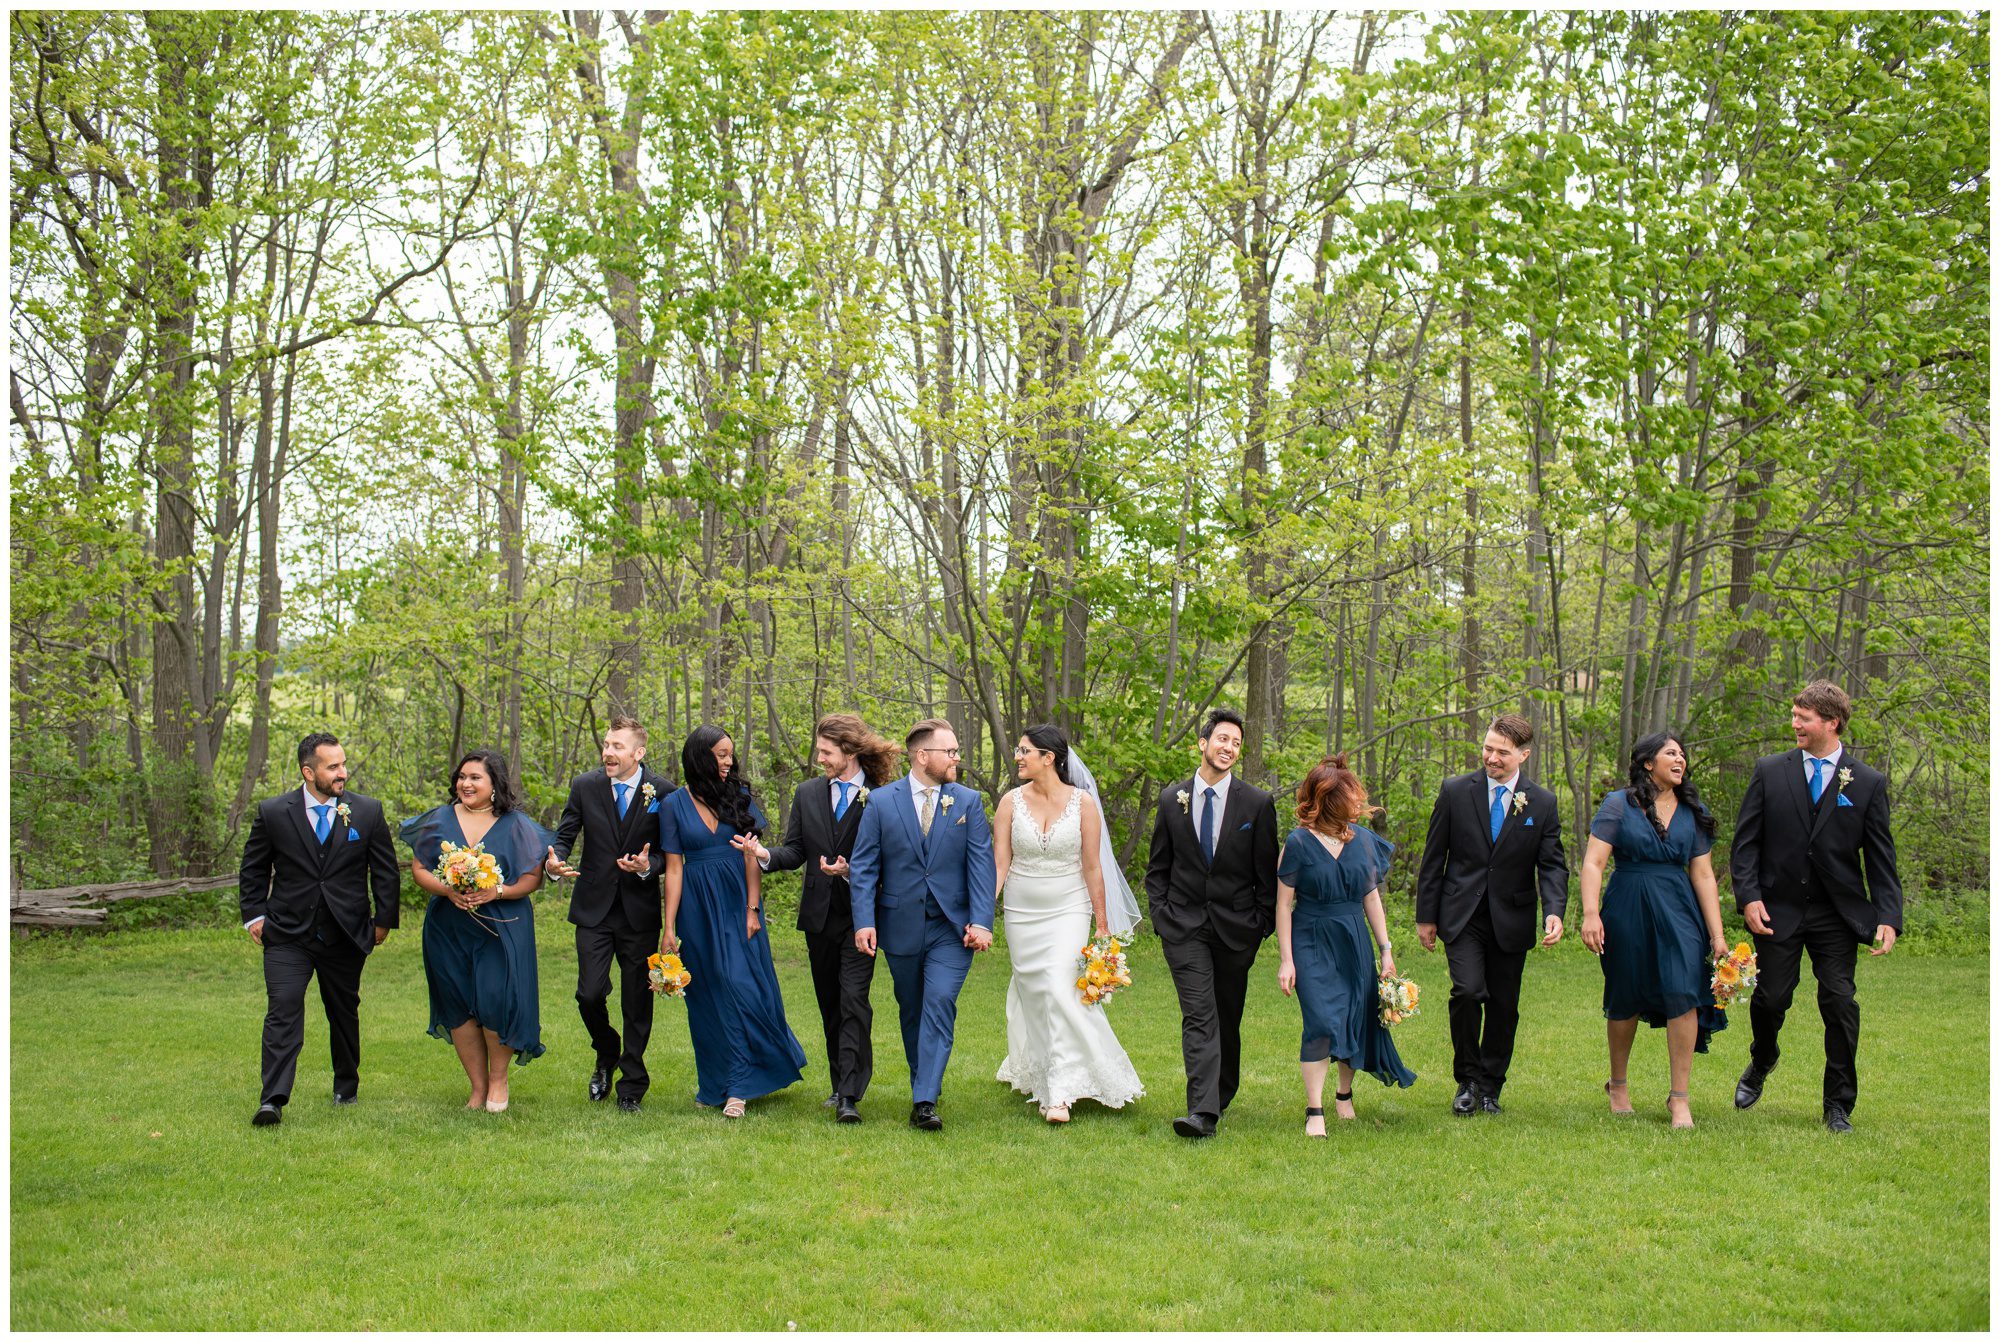 Forest City Wedding, Forest City National Wedding, London Ontario Wedding Photographers.